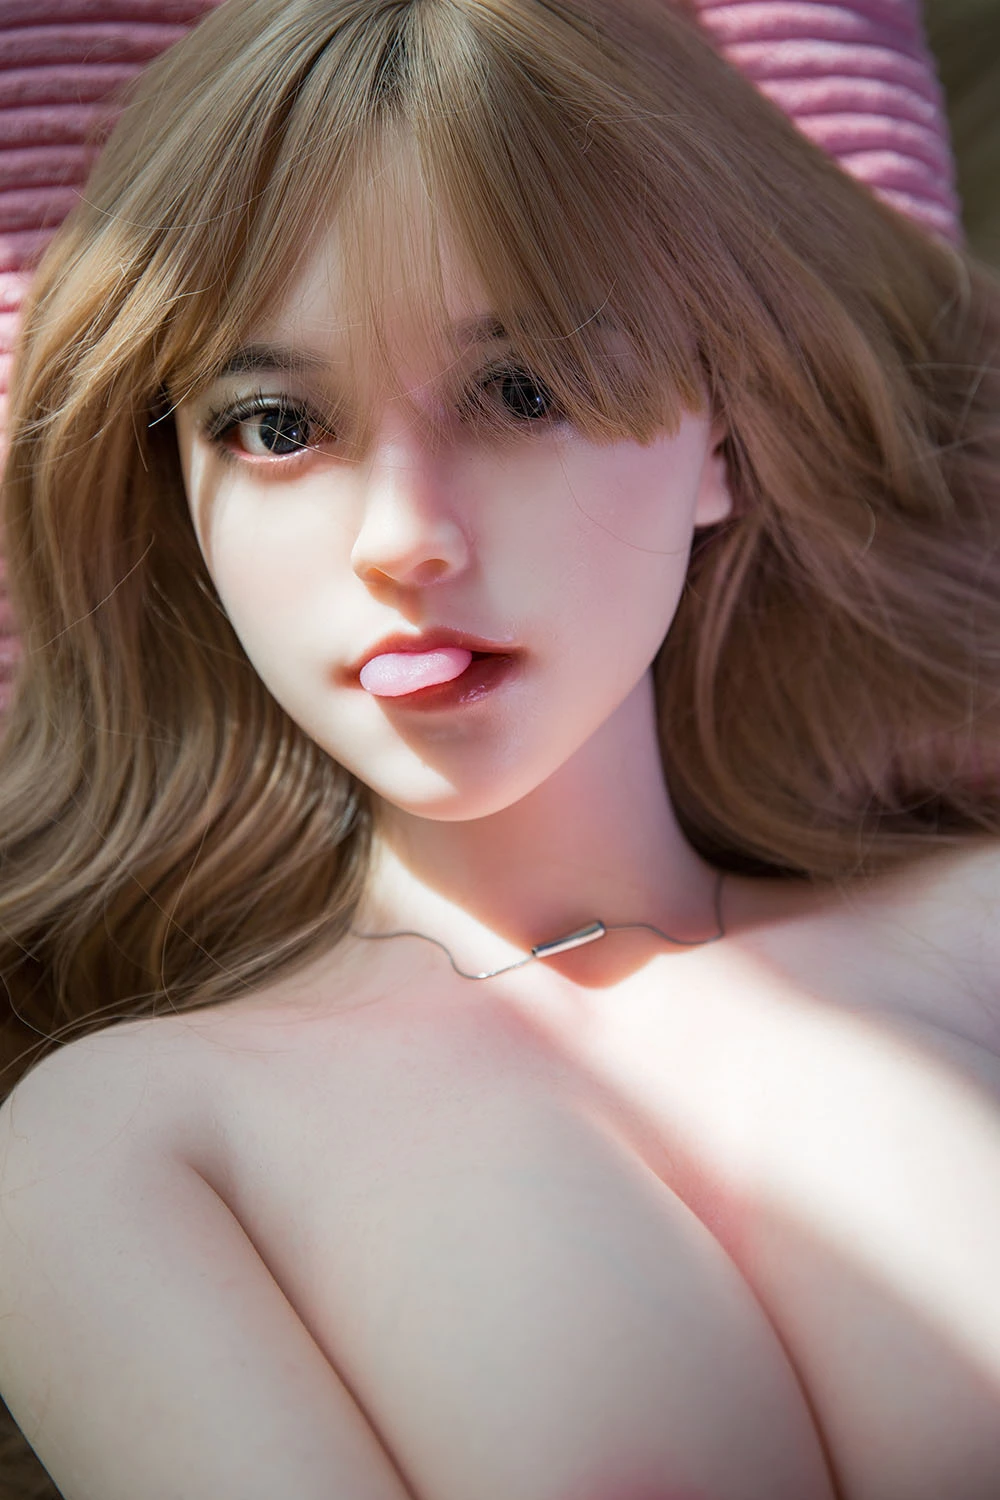 big breast perfect body sex doll